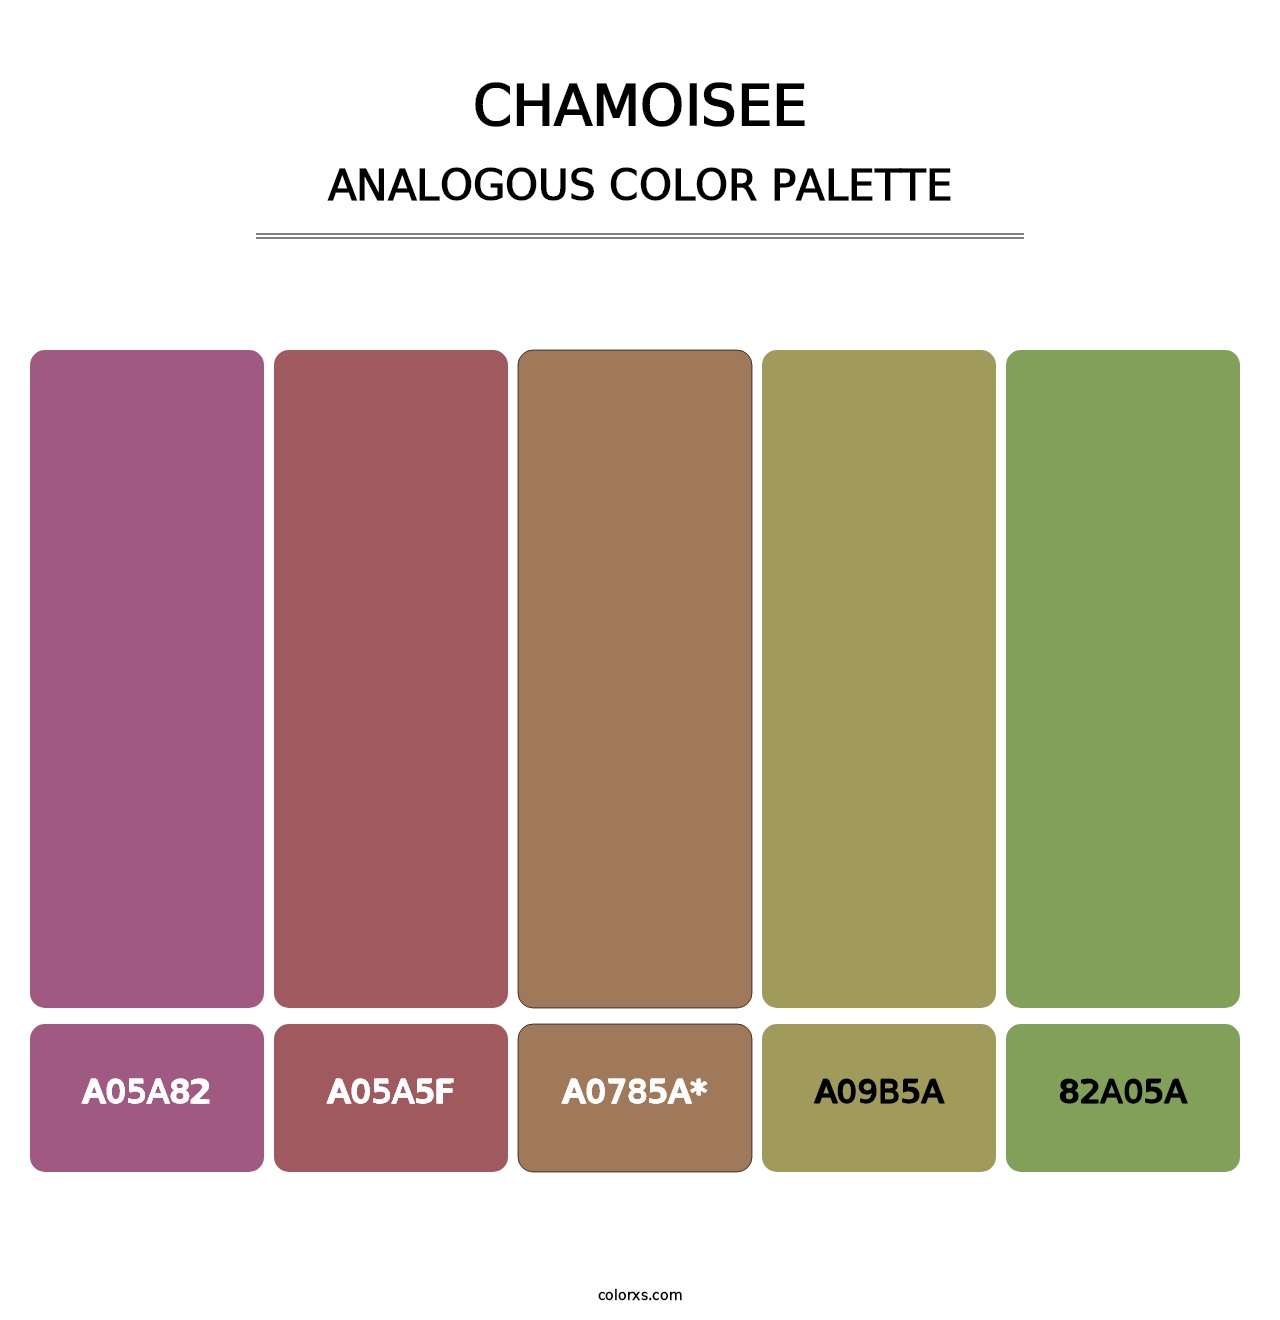 Chamoisee - Analogous Color Palette